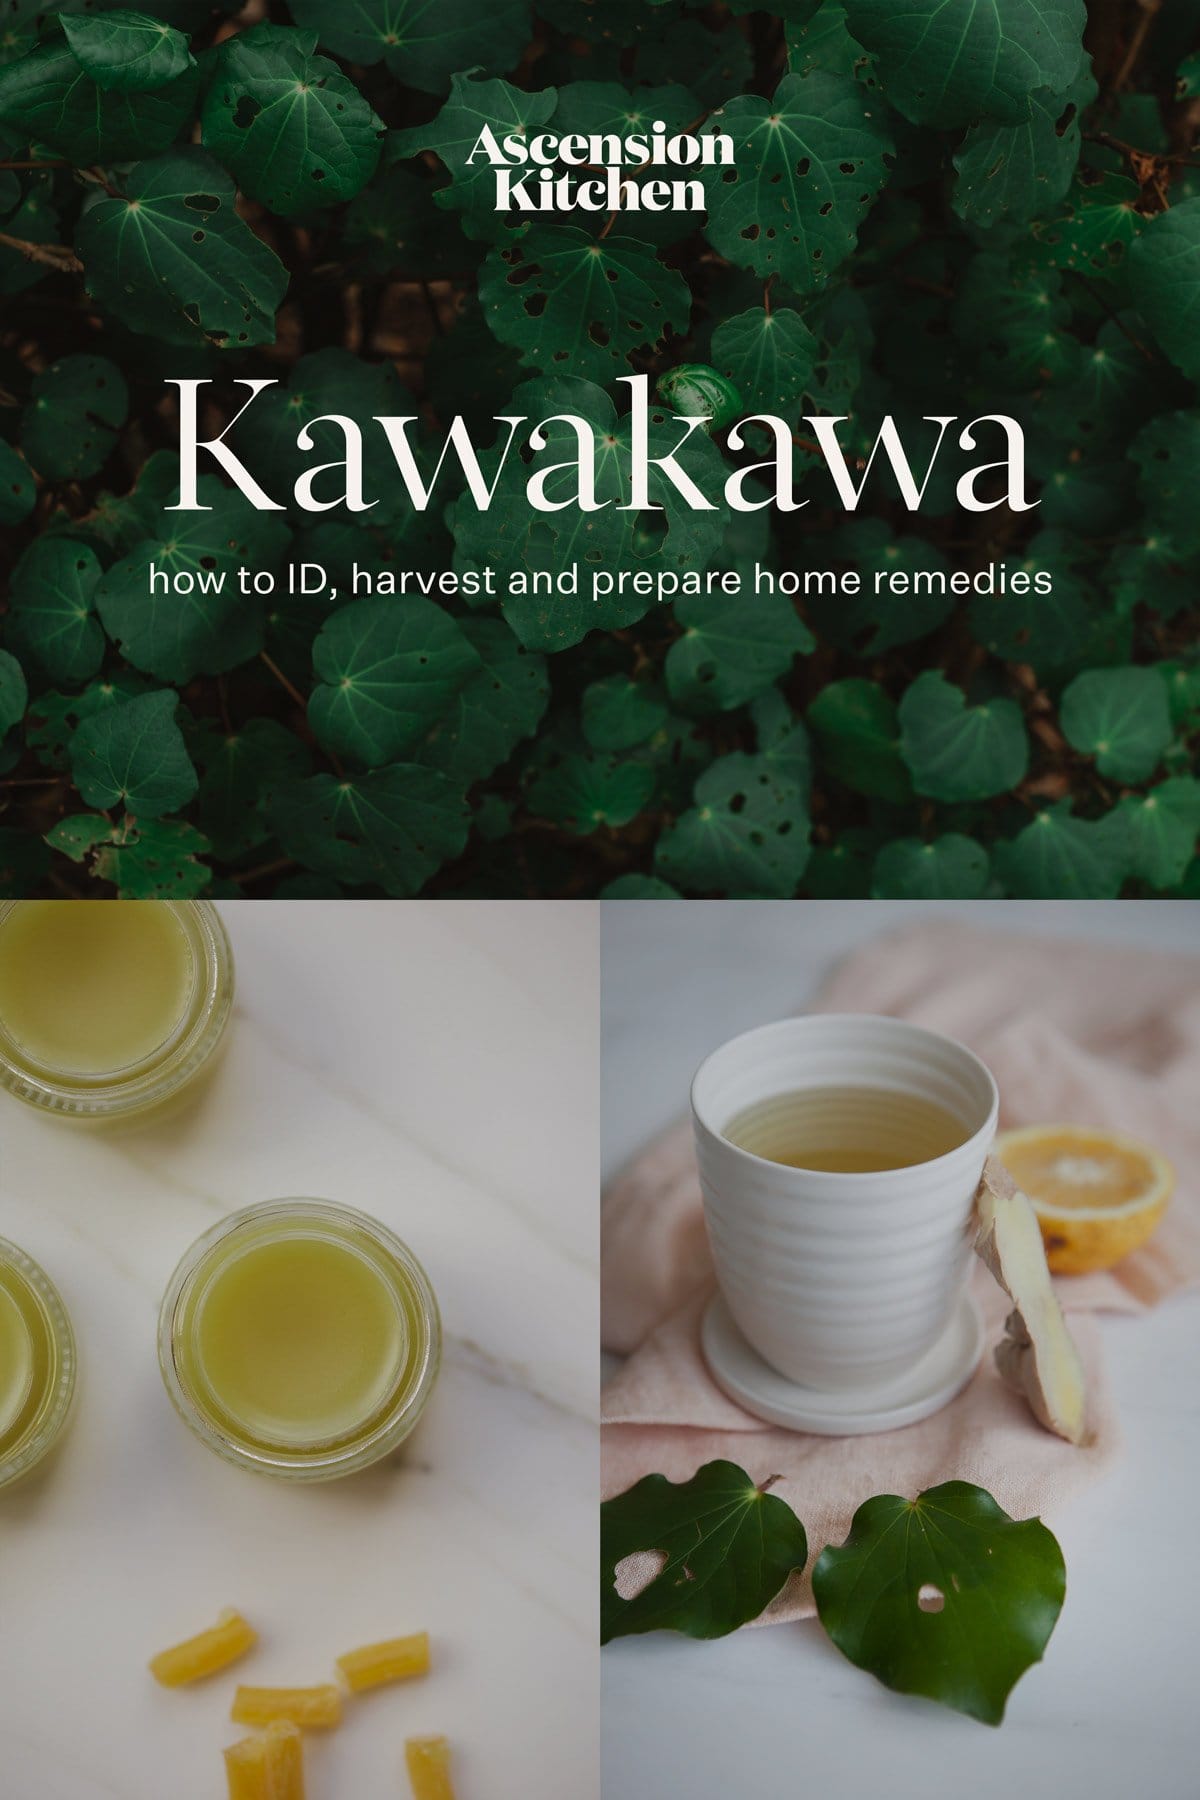 An image composite of a dense kawakawa shrub, with a few open jars of kawakawa balm, and a kawakawa tea. Text over the top reads "Kawakawa, how to ID, harvest and prepare home remedies."